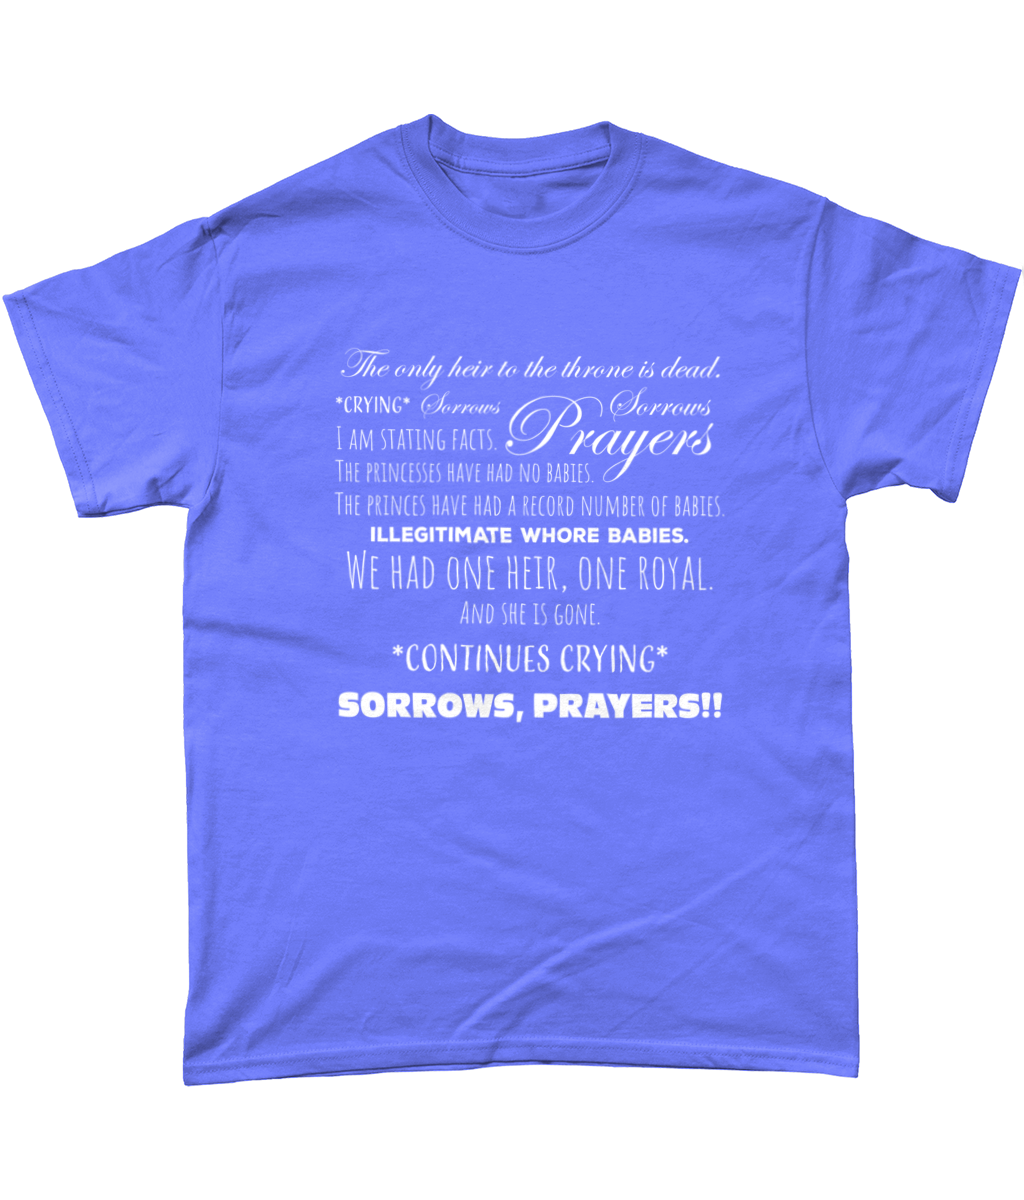 Sorrows, Sorrows, Prayers T-Shirt